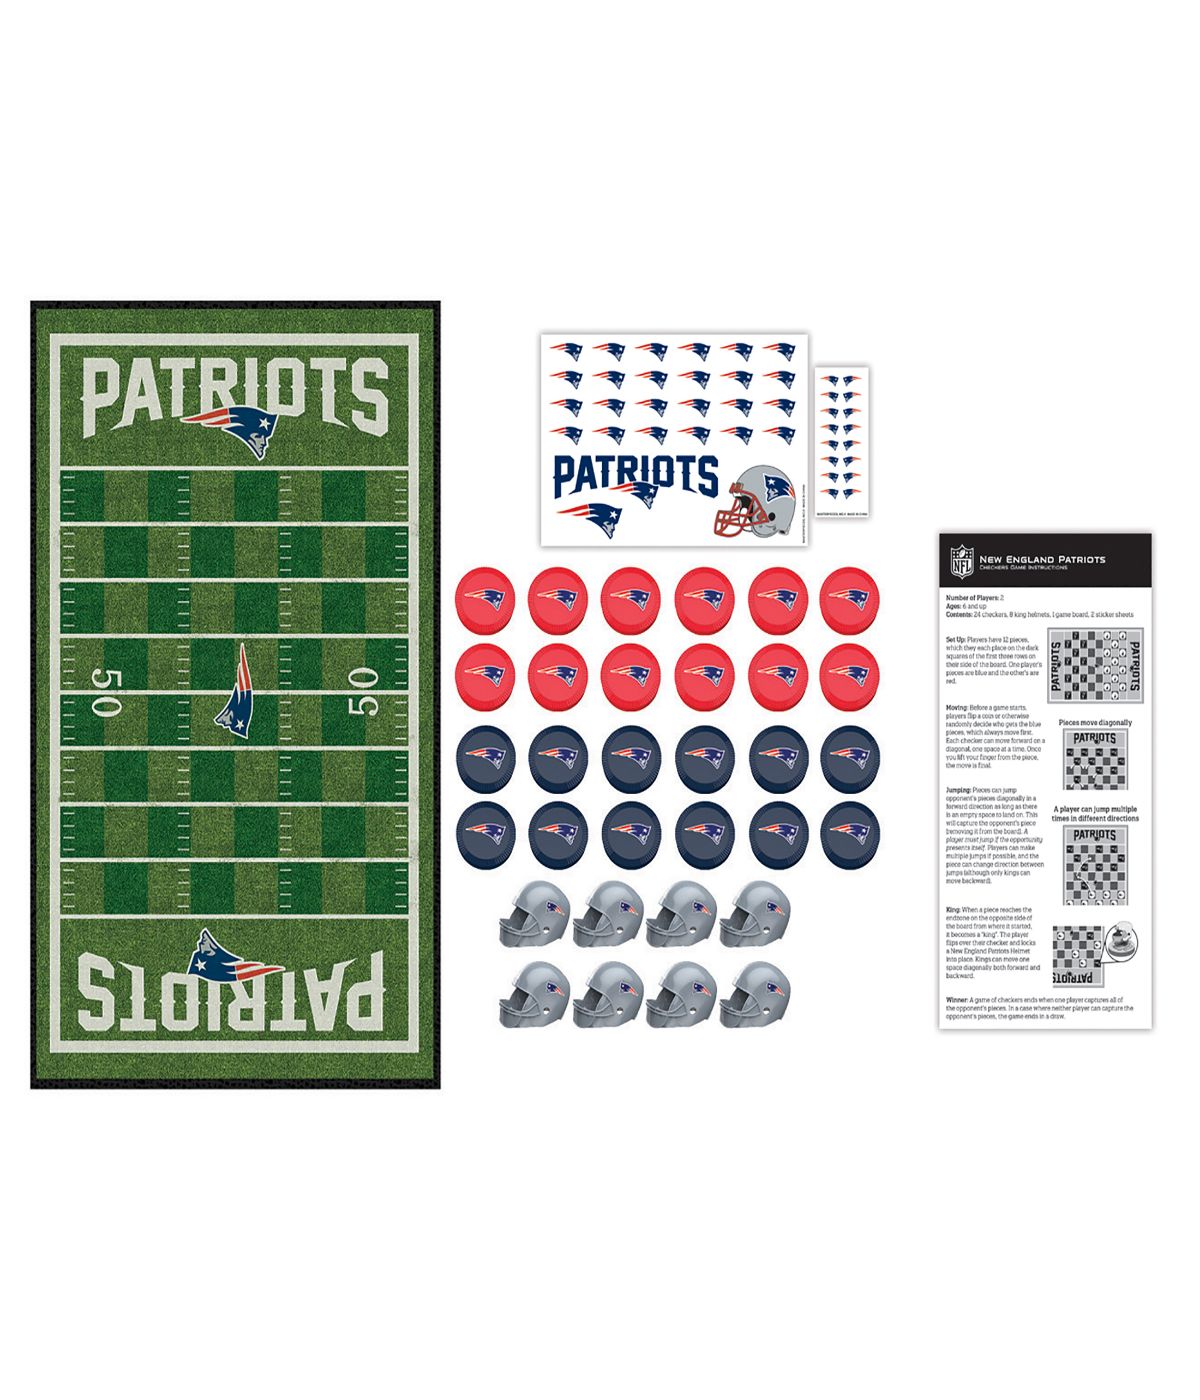 NFL Checkers - New England Patriots Multi